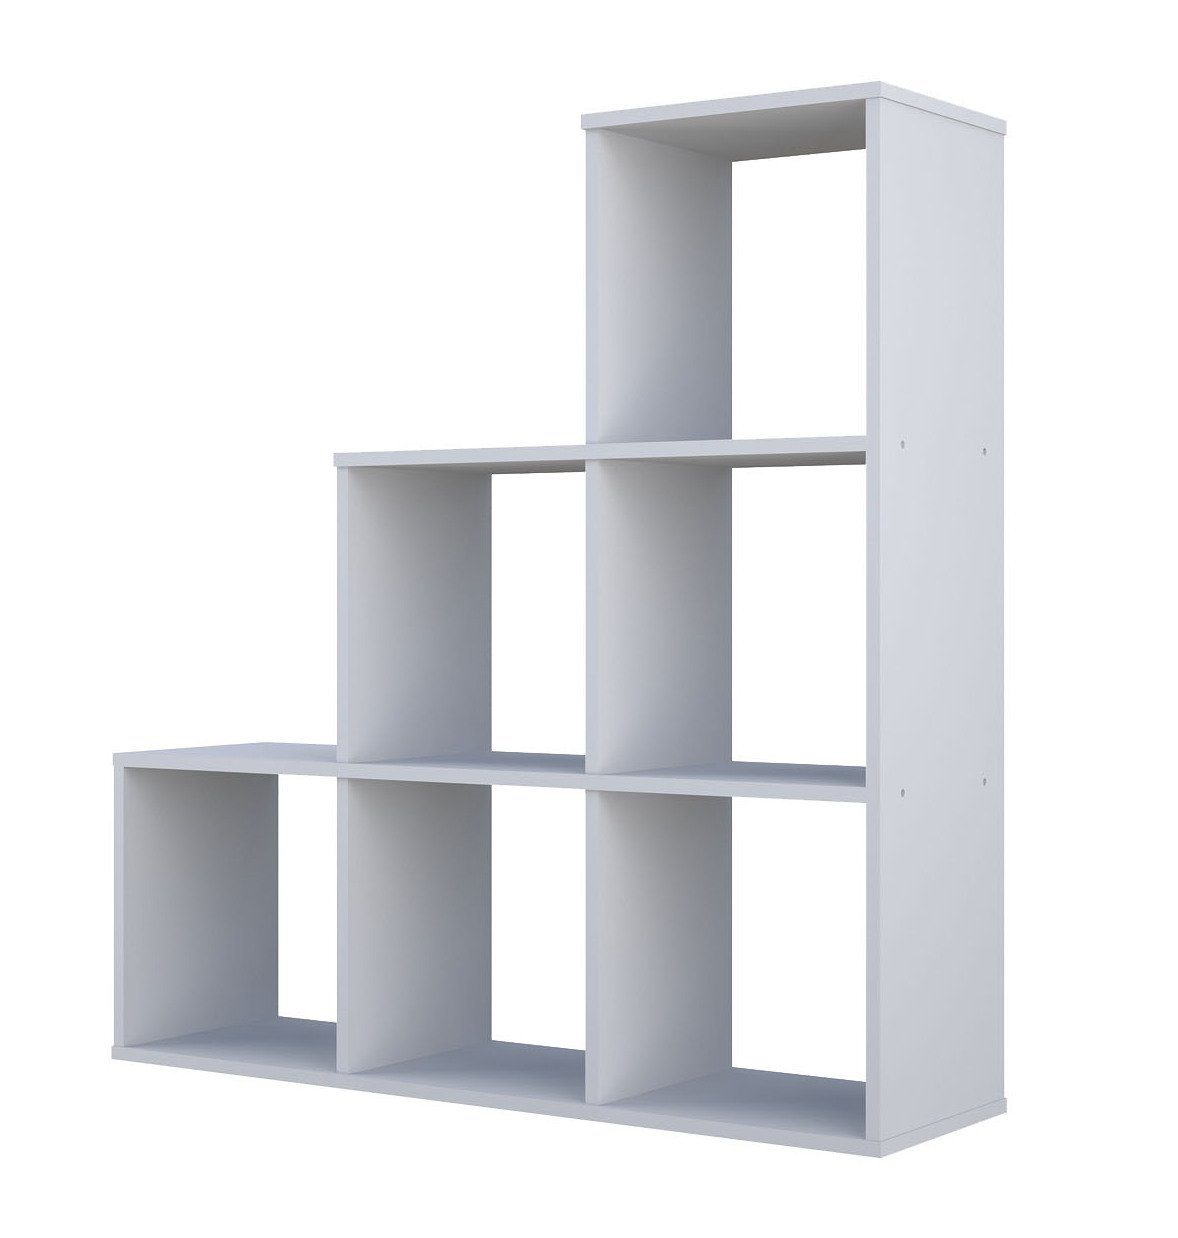 Polini Home Raumteilerregal Treppenregal weiß weiß 6 | Fächer Regal Raumteiler Stufenregal 107x104x29c weiß